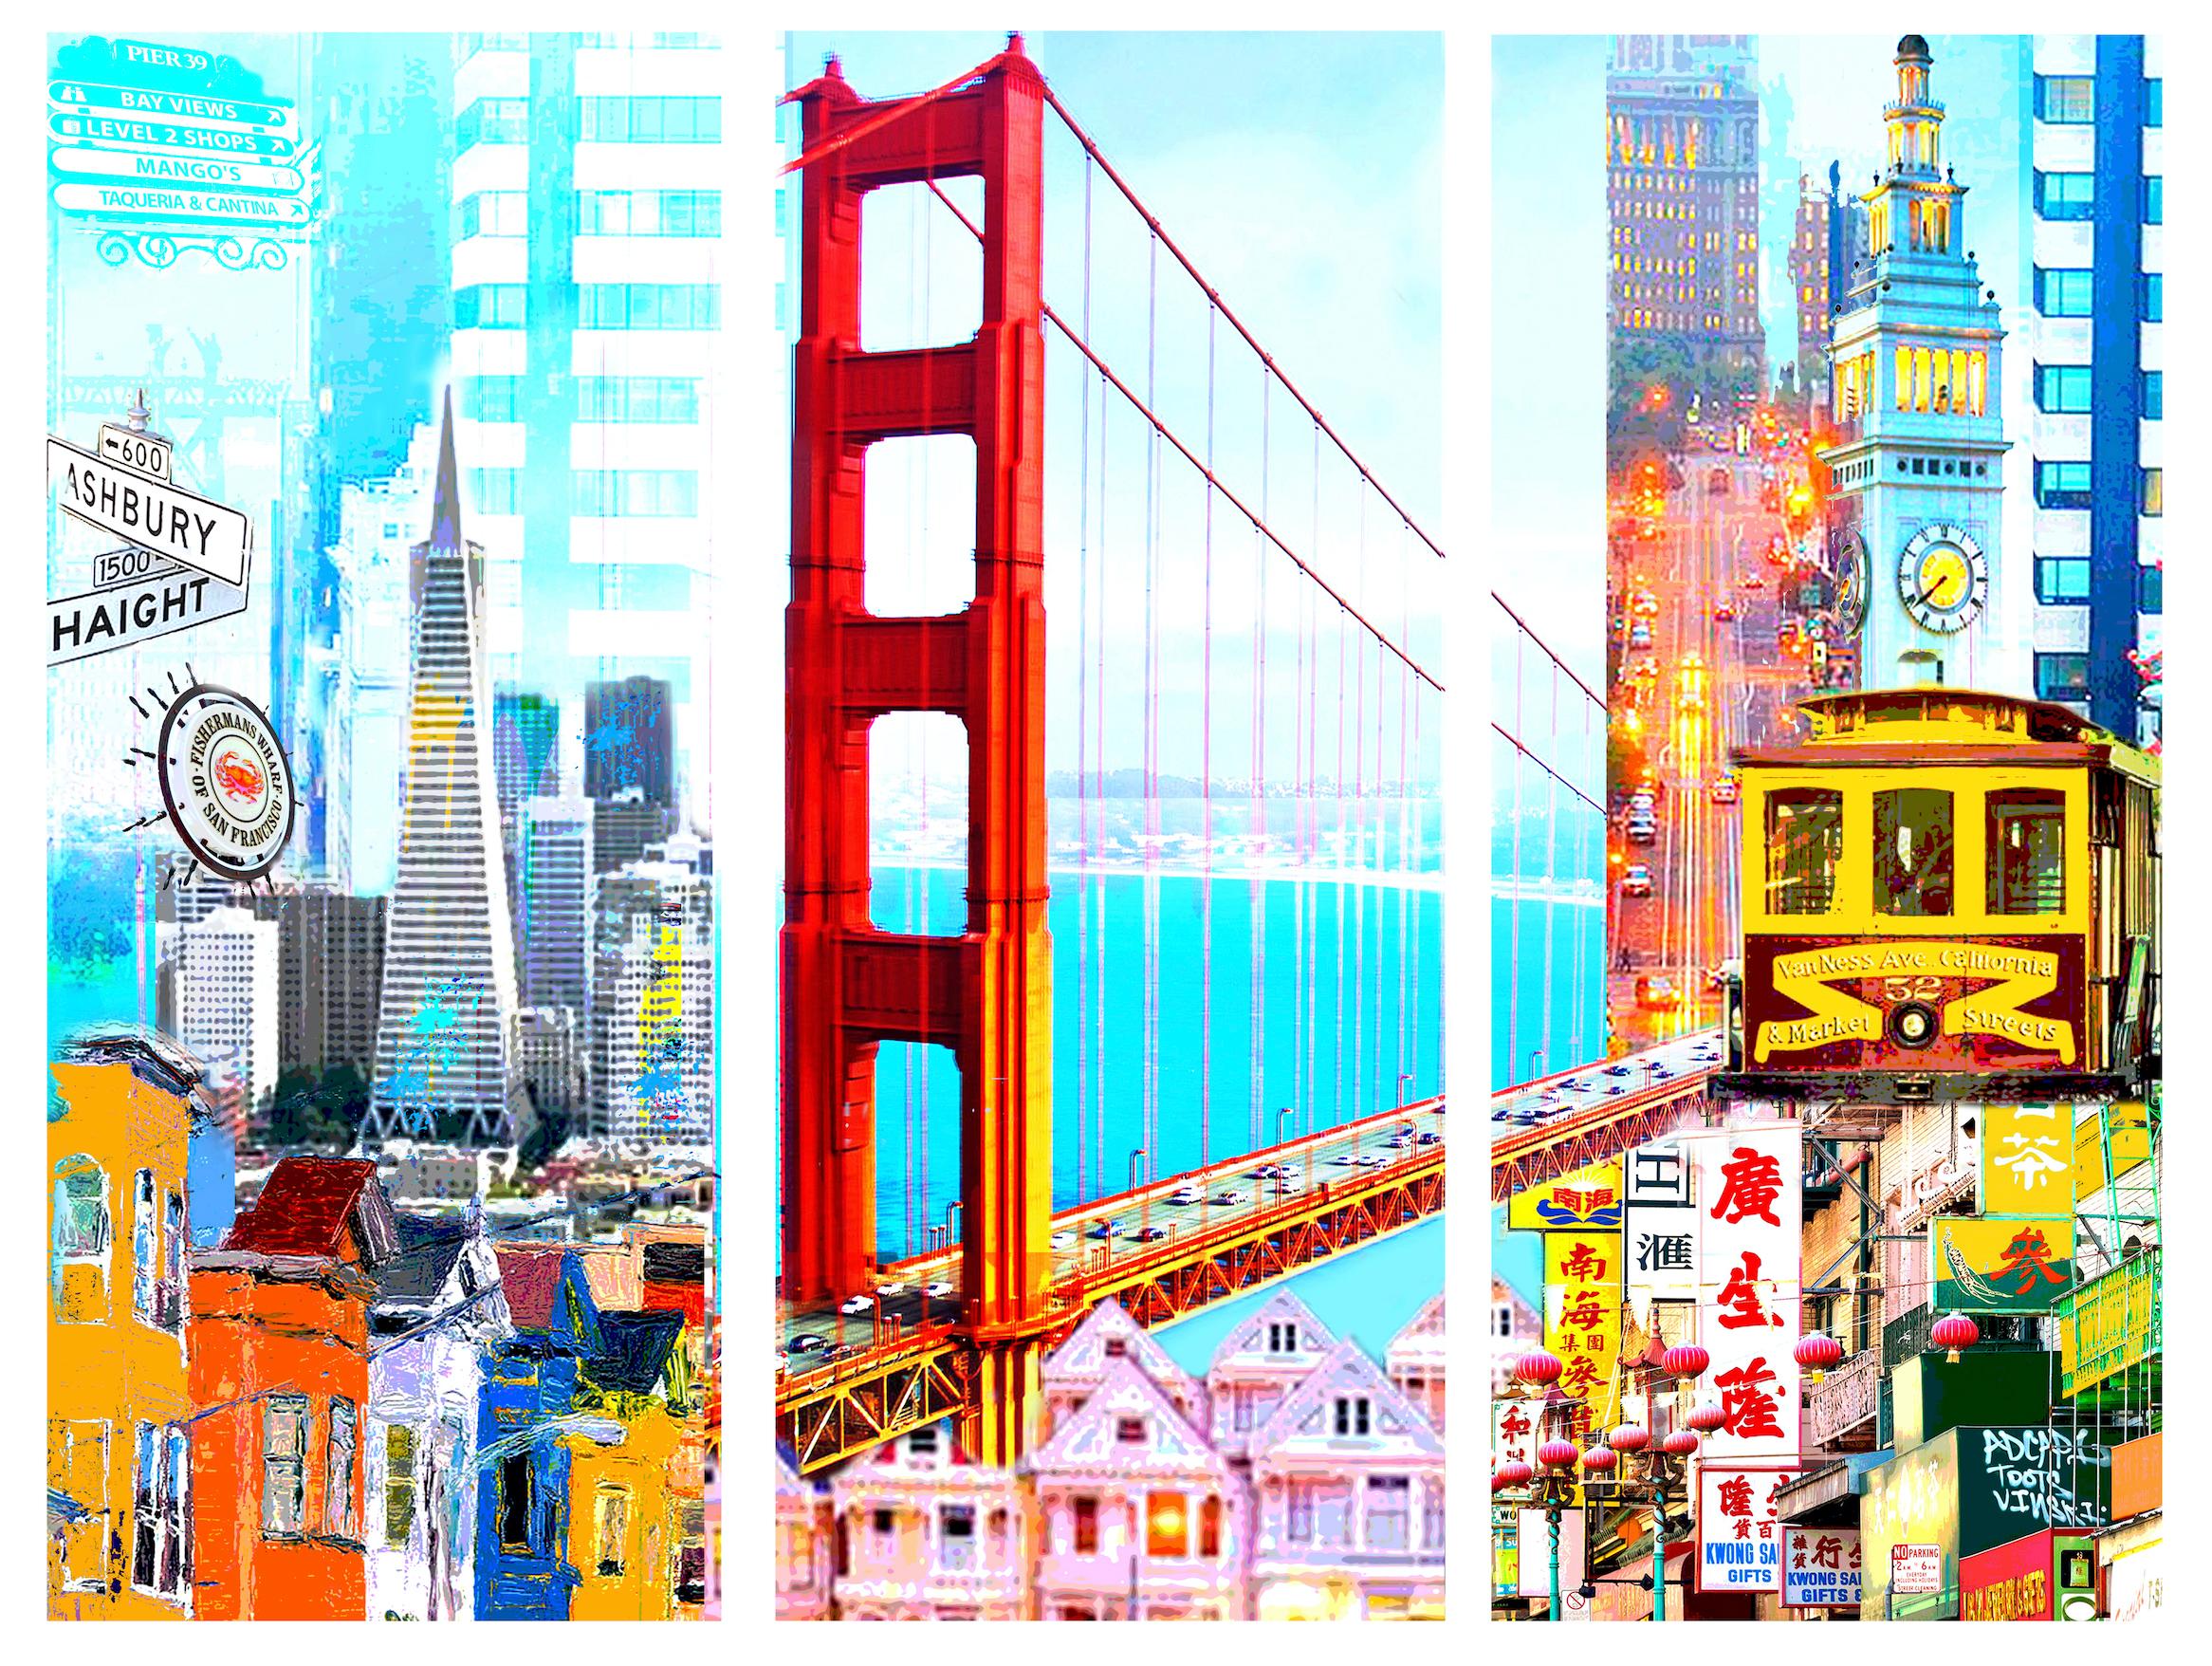 I Love San Francisco - Mixed Media Art by Dganit Blechner